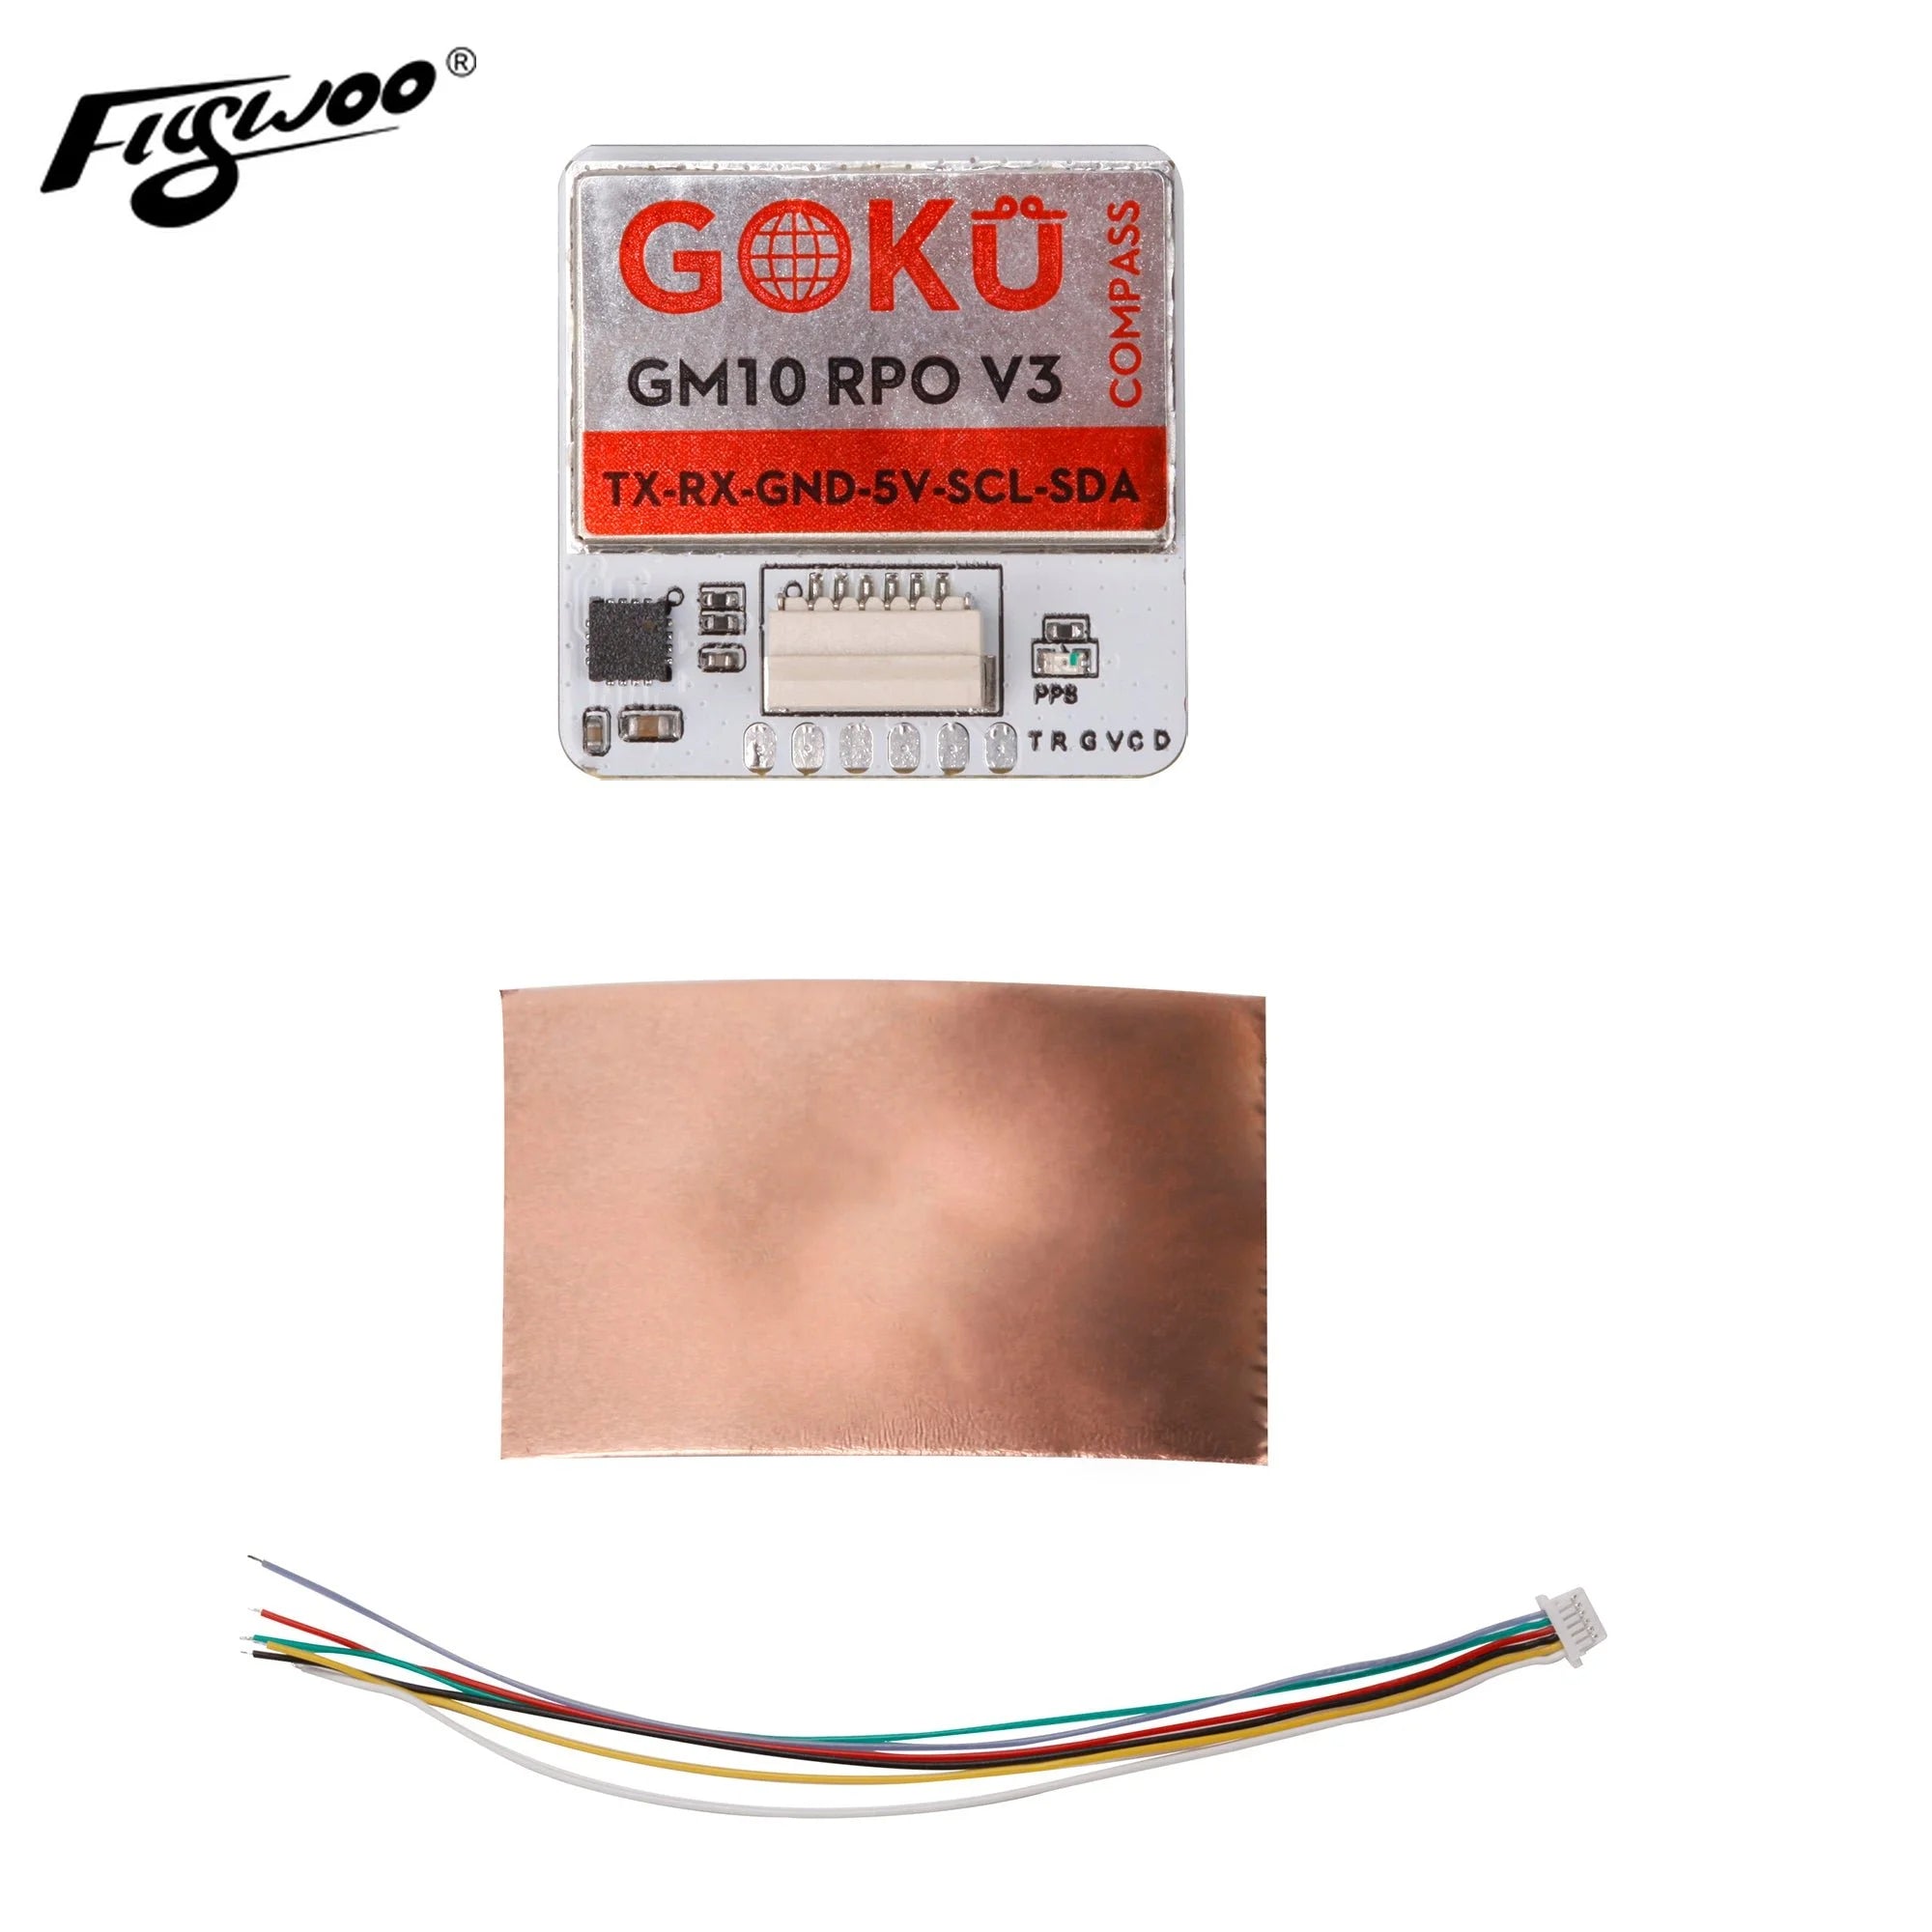 FLYWOO GOKU GM10 Pro V3 GPS SPECIFICATION